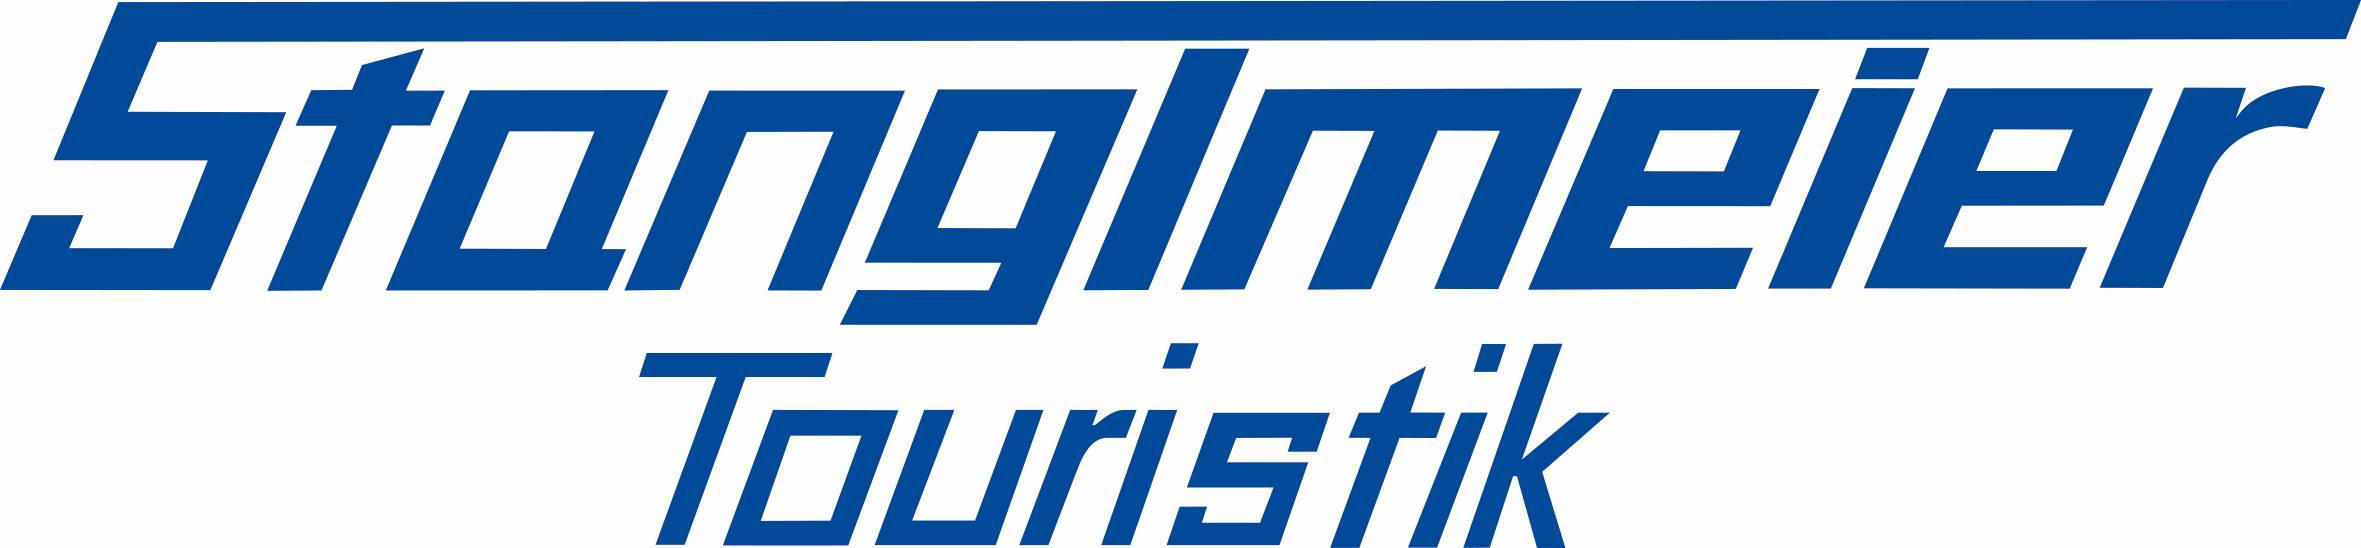 Veranstalter Logo Stanglmeier Touristik GmbH & Co. KG